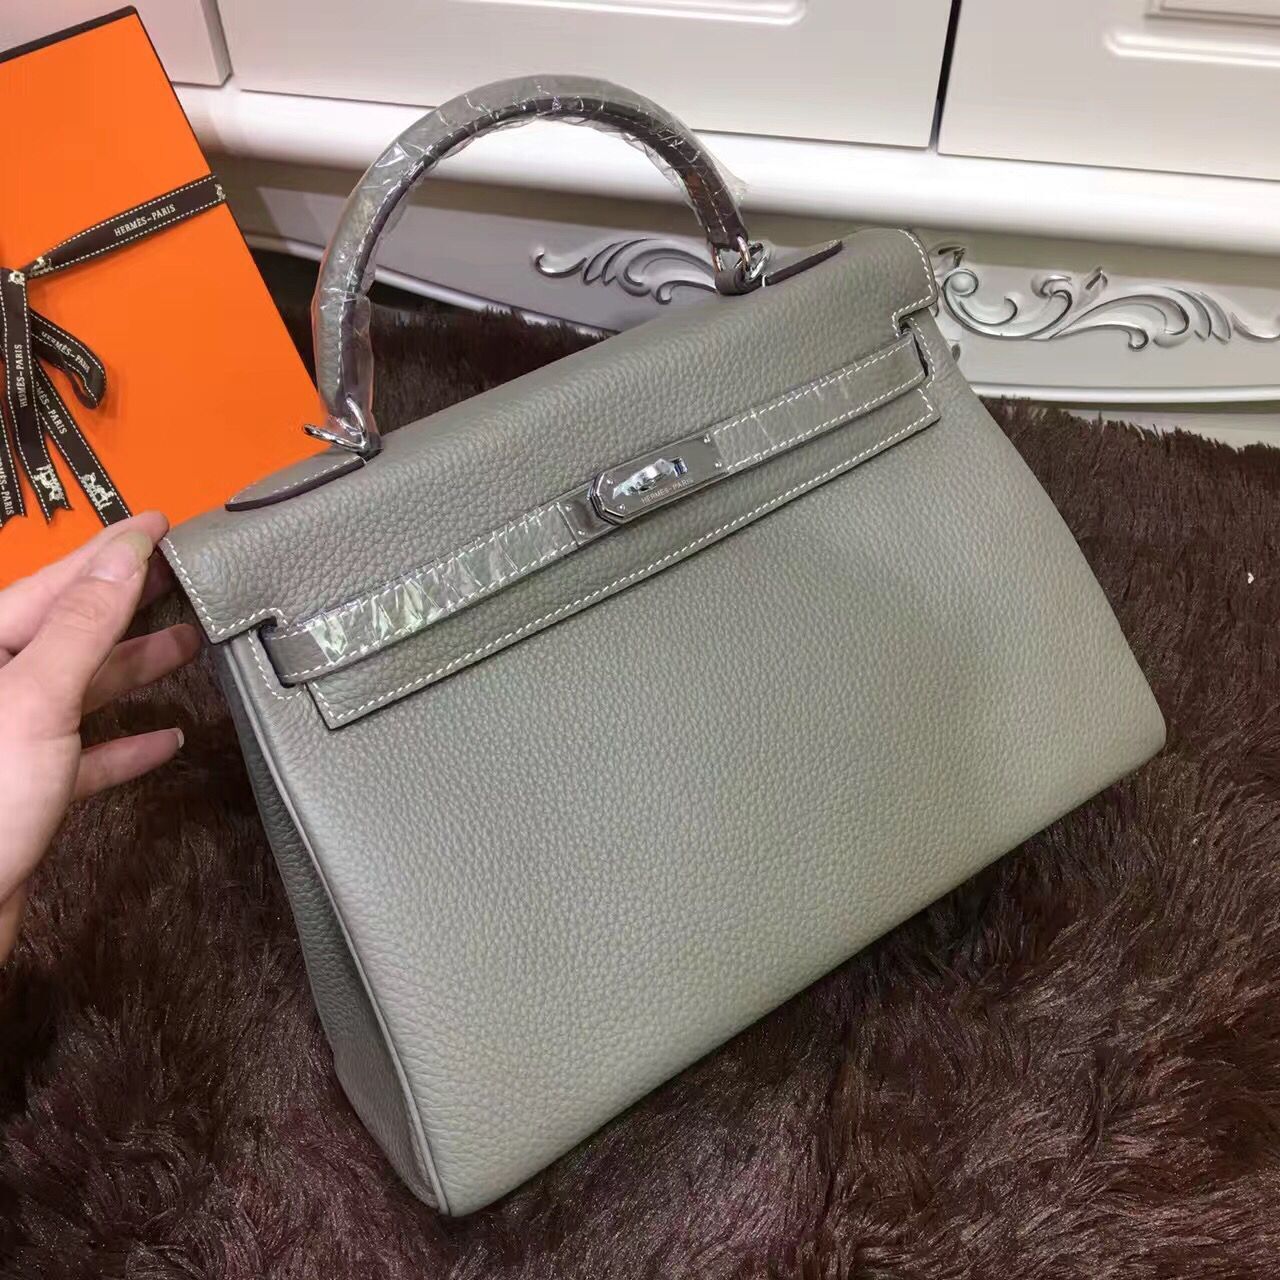 Gloss Vintage & Luxury Bag Ltd on Instagram: Only one in the market Hermes  kelly 32cm elephant skin ghw #hermeselephant #hermeselephantskin  #vintagehermes #vintagekelly #glossvintage